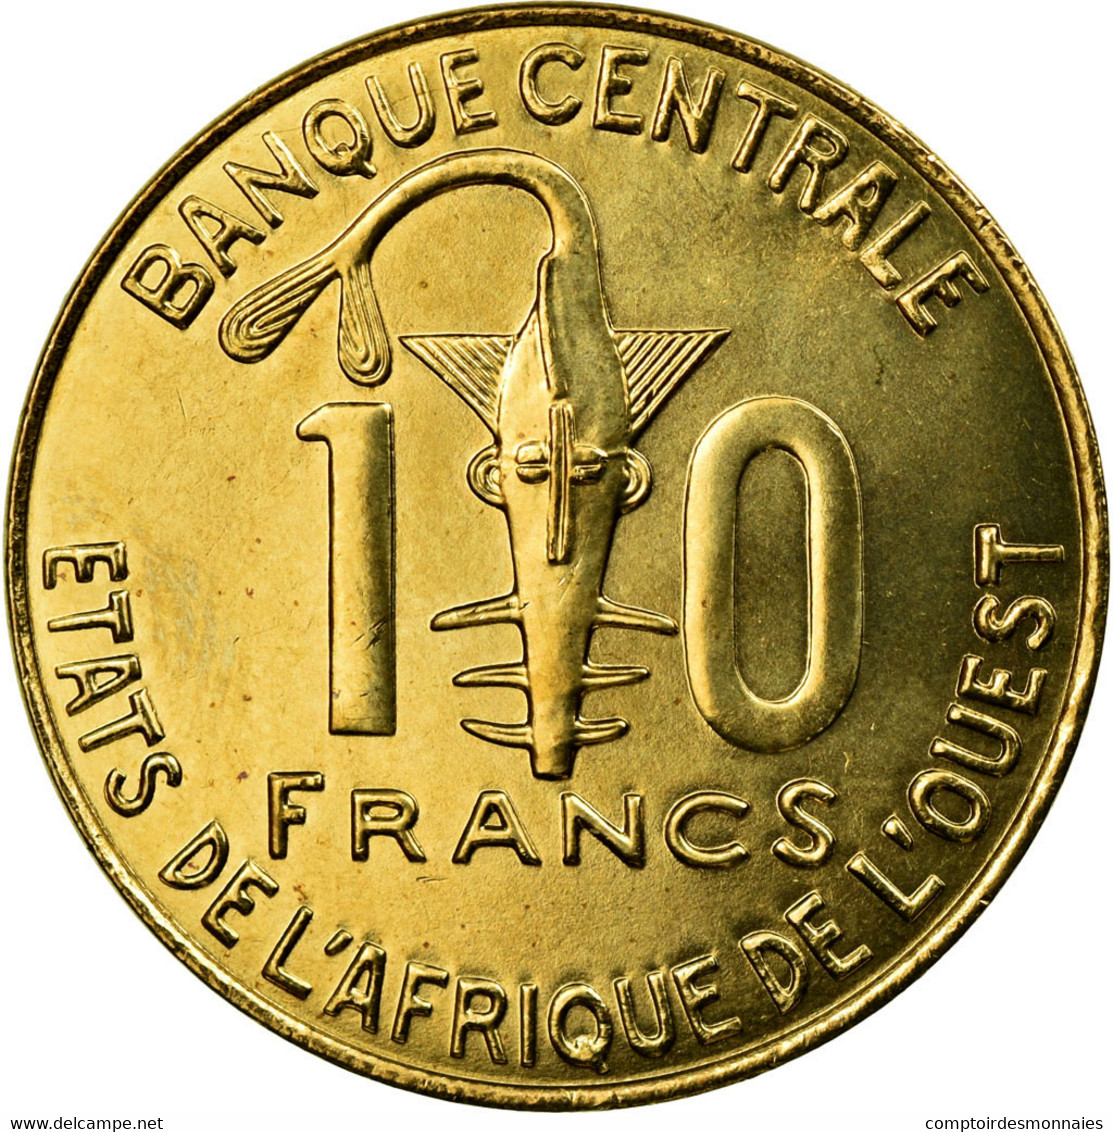 Monnaie, West African States, 10 Francs, 2005, SUP, Aluminum-Bronze, KM:10 - Costa D'Avorio